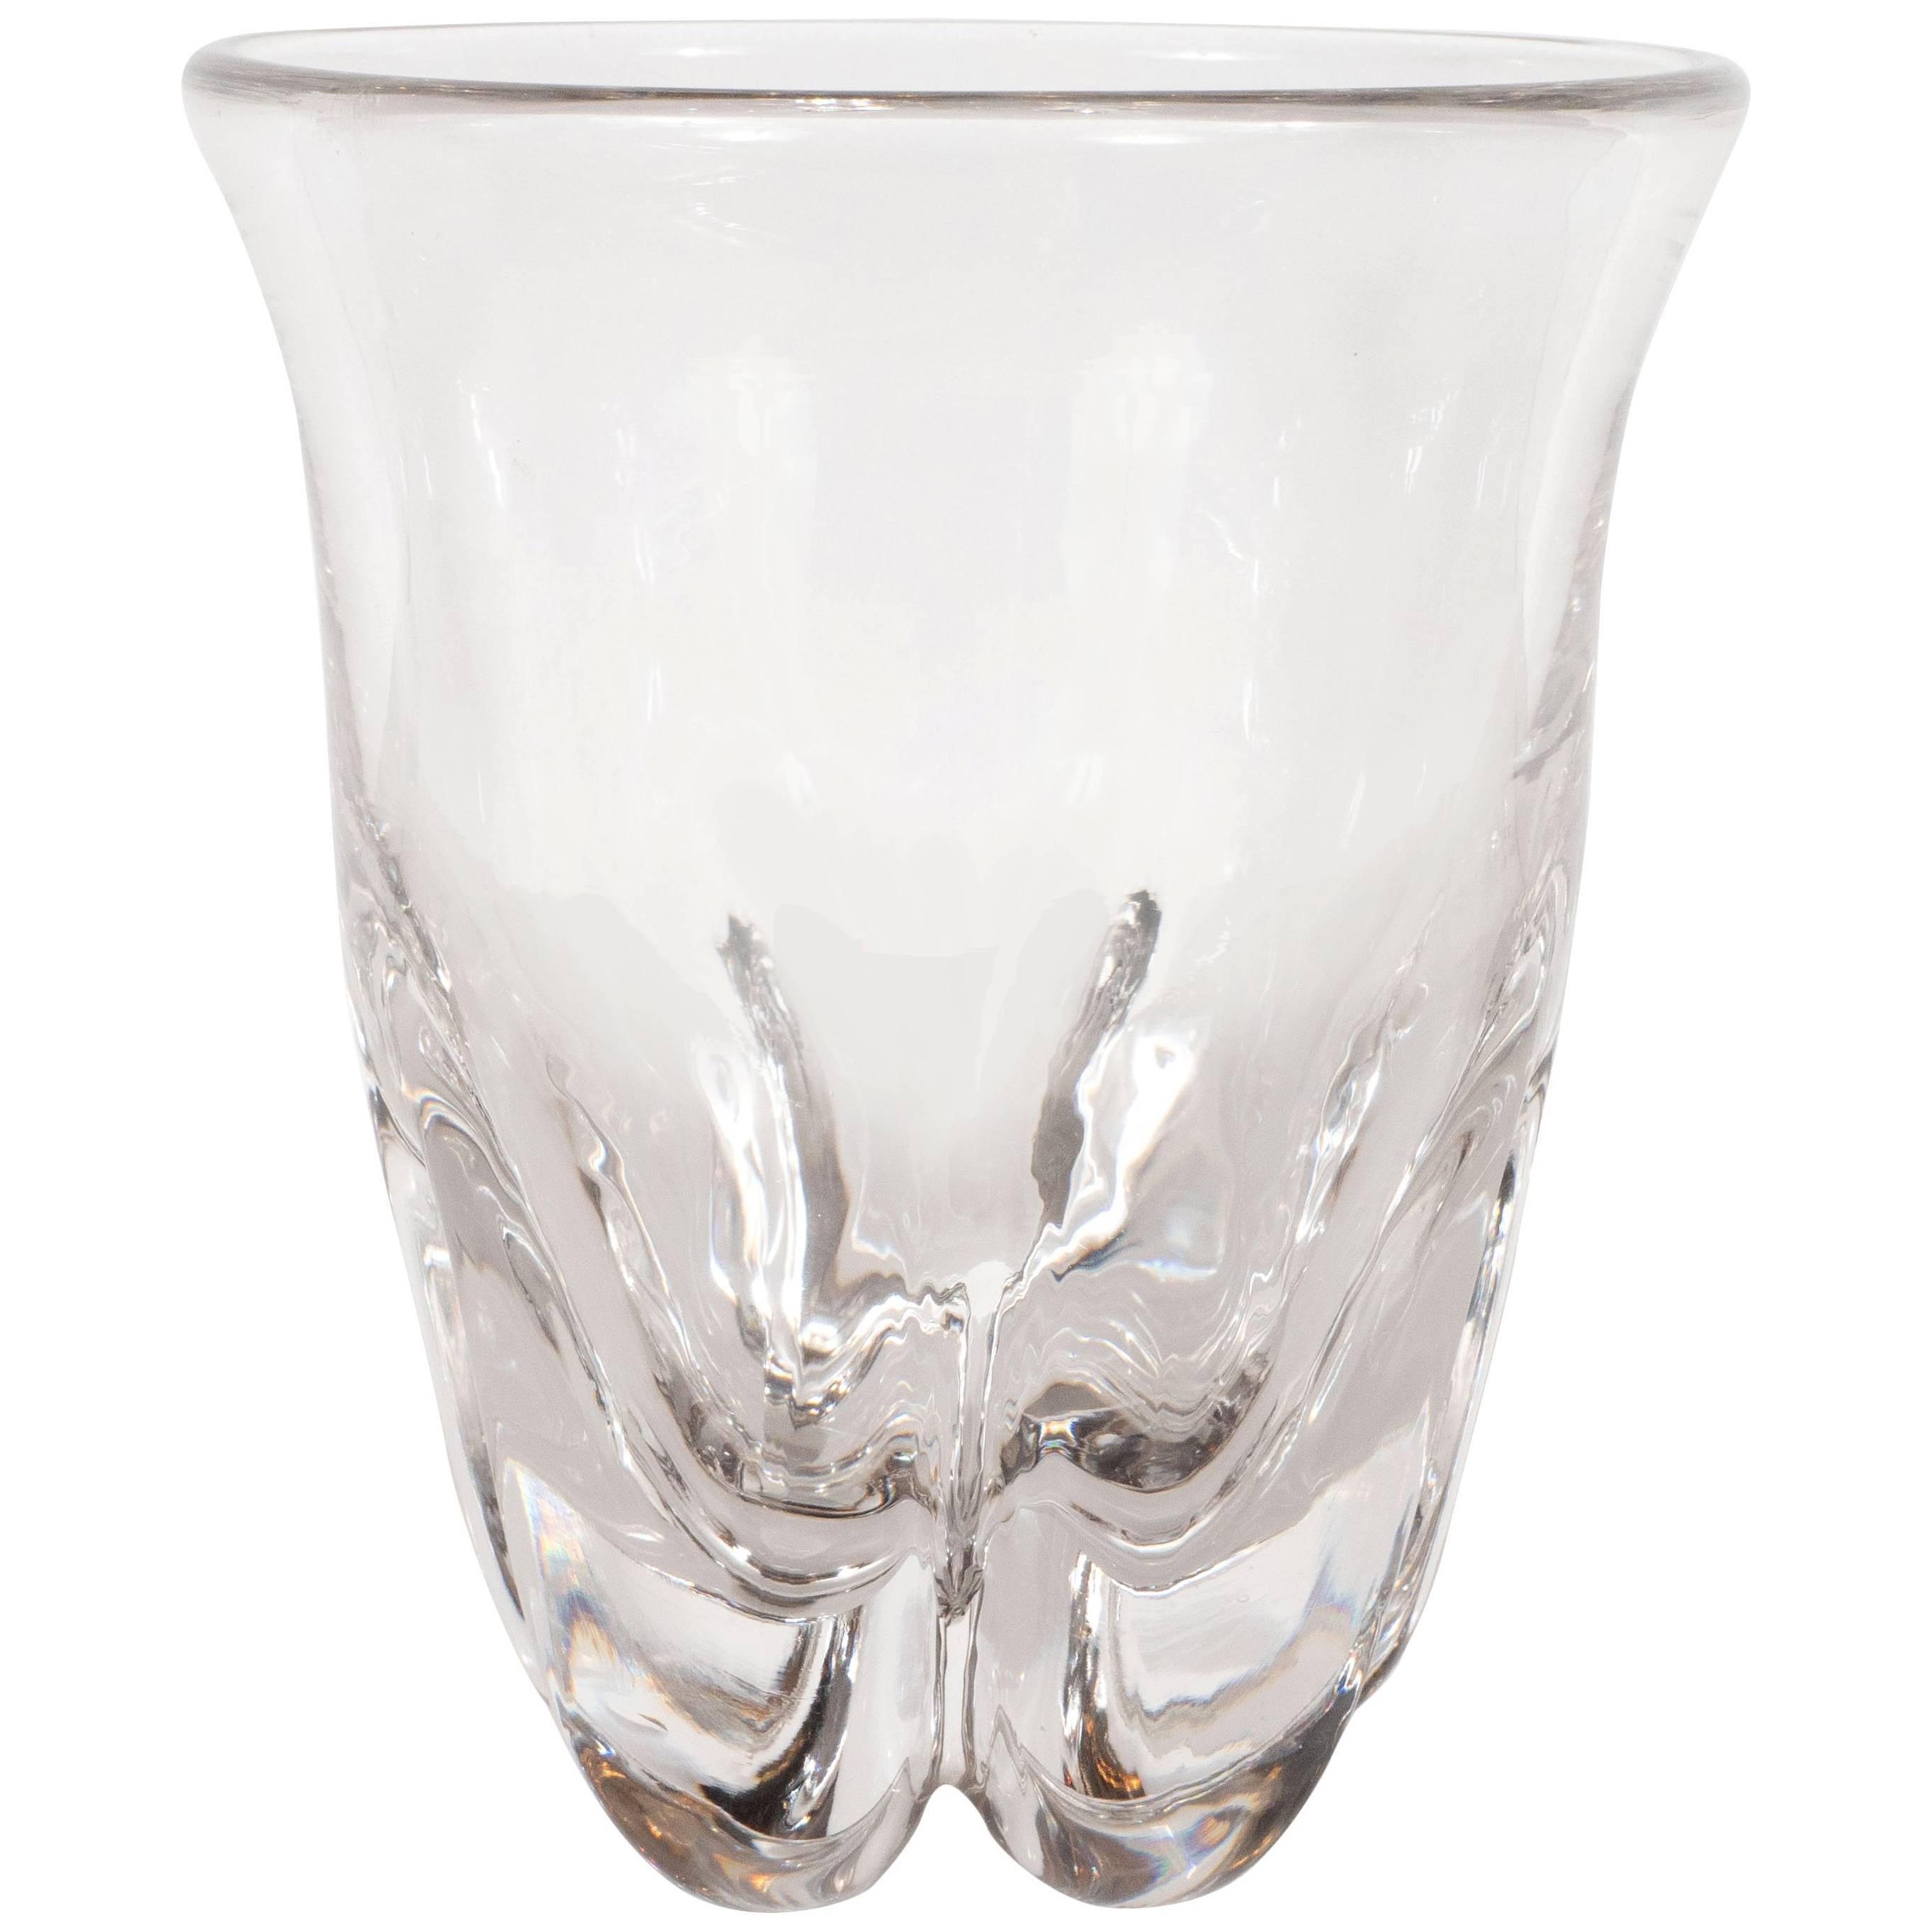 Sculptural Scandinavian Mid-Century Modern Handblown Translucent Glass Vase